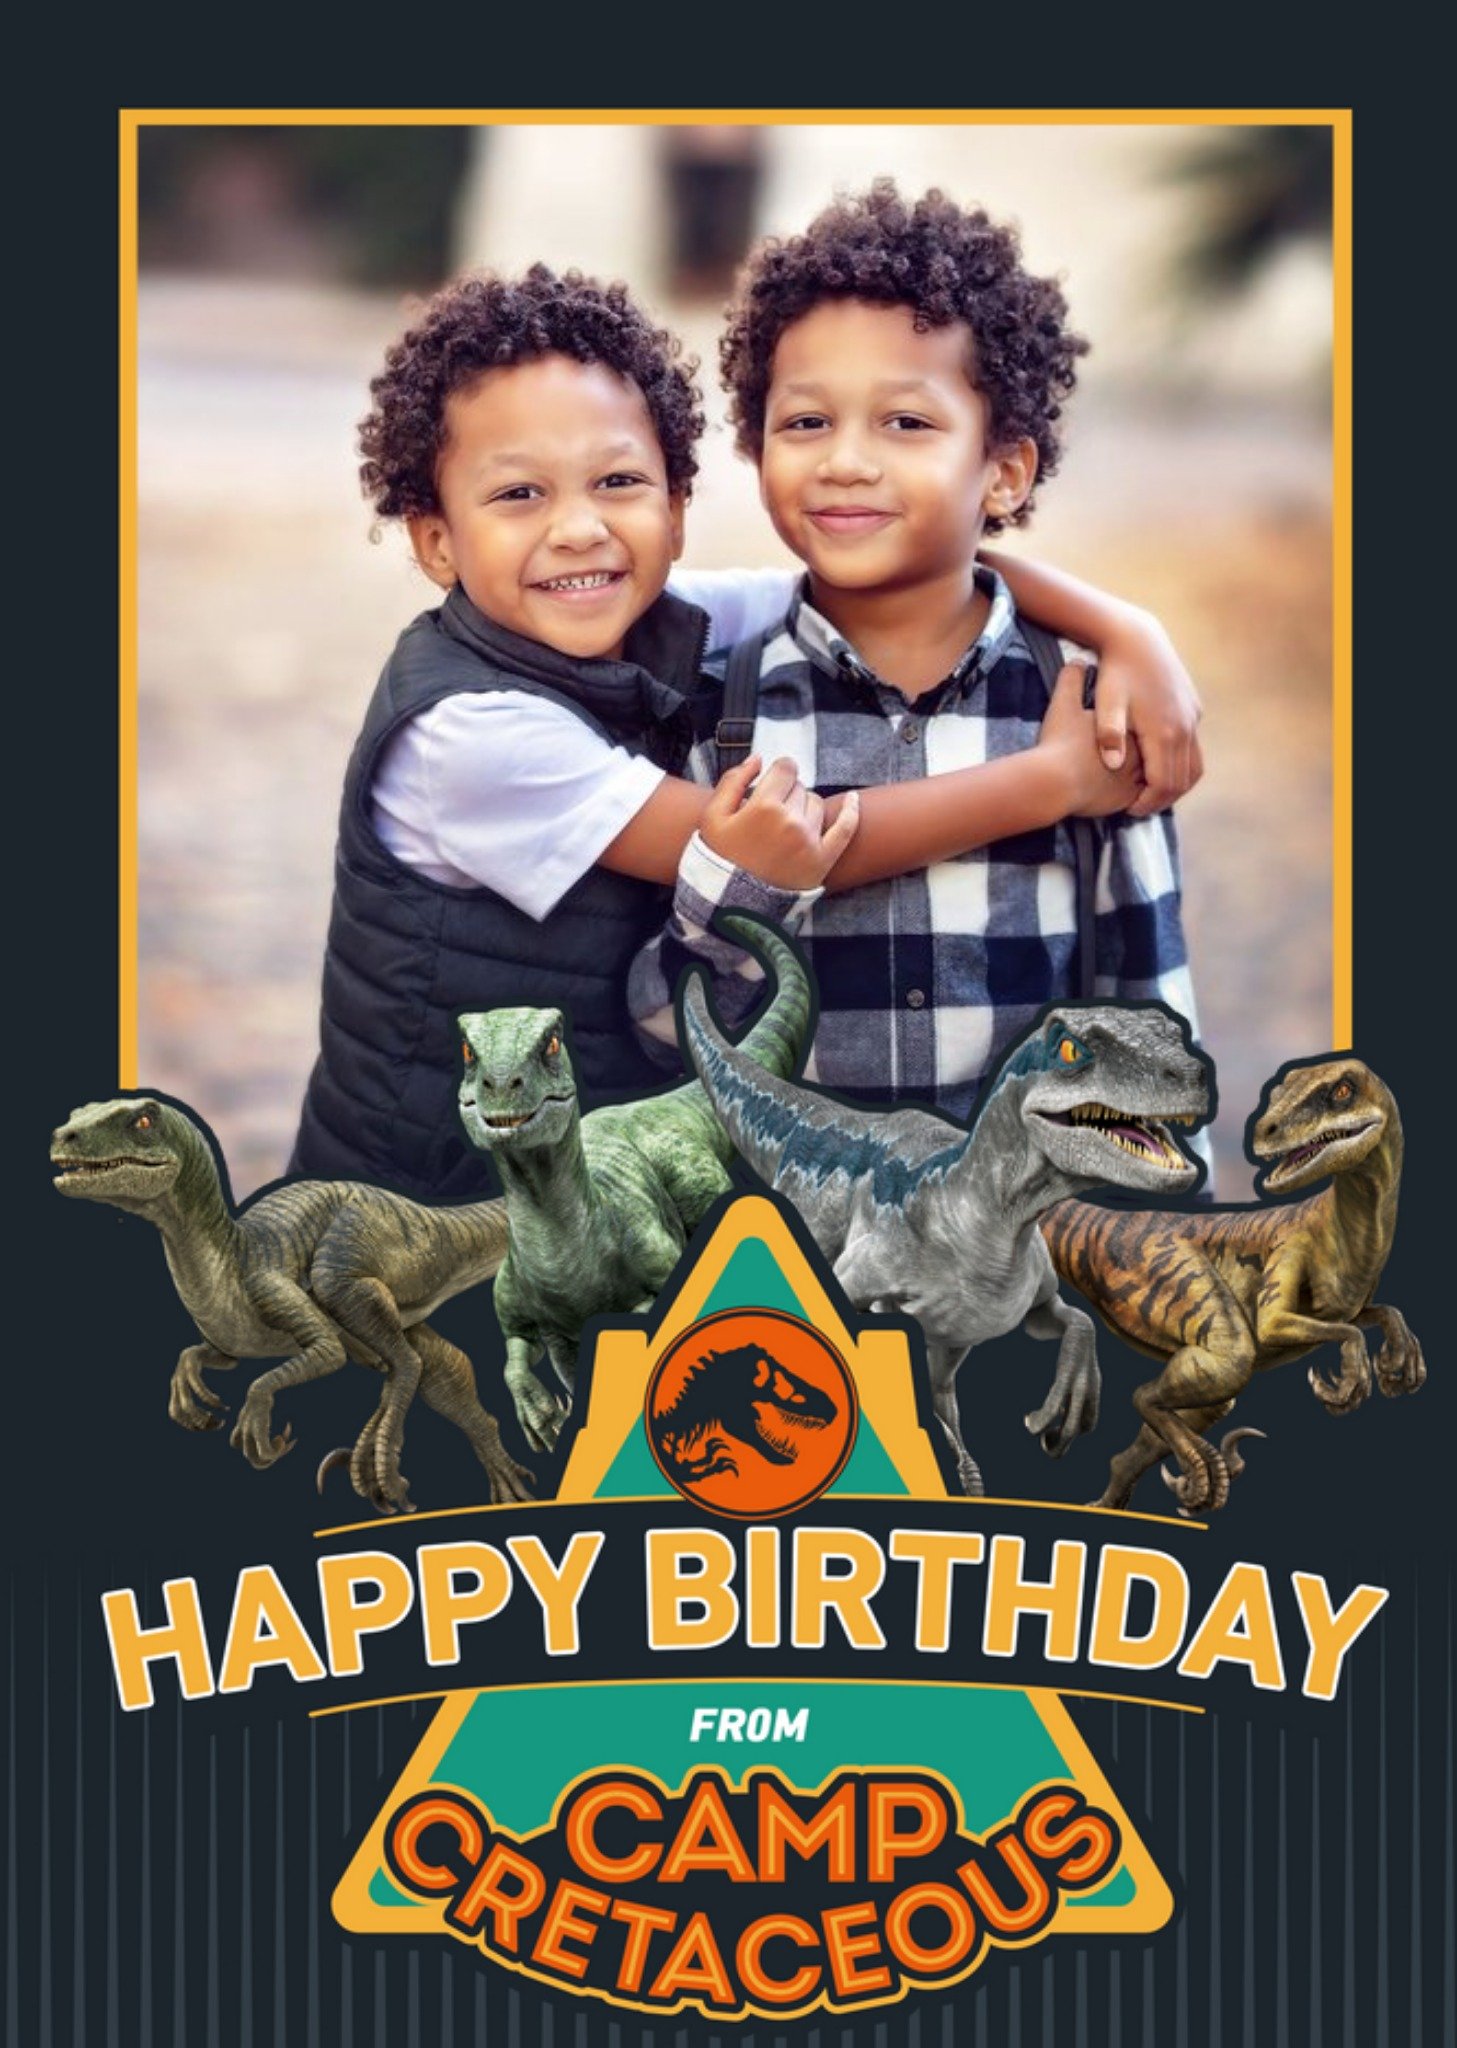 Jurassic World Jurassic Camp Cretaceous Dinosaur Raptor Photo Upload Birthday Card, Large